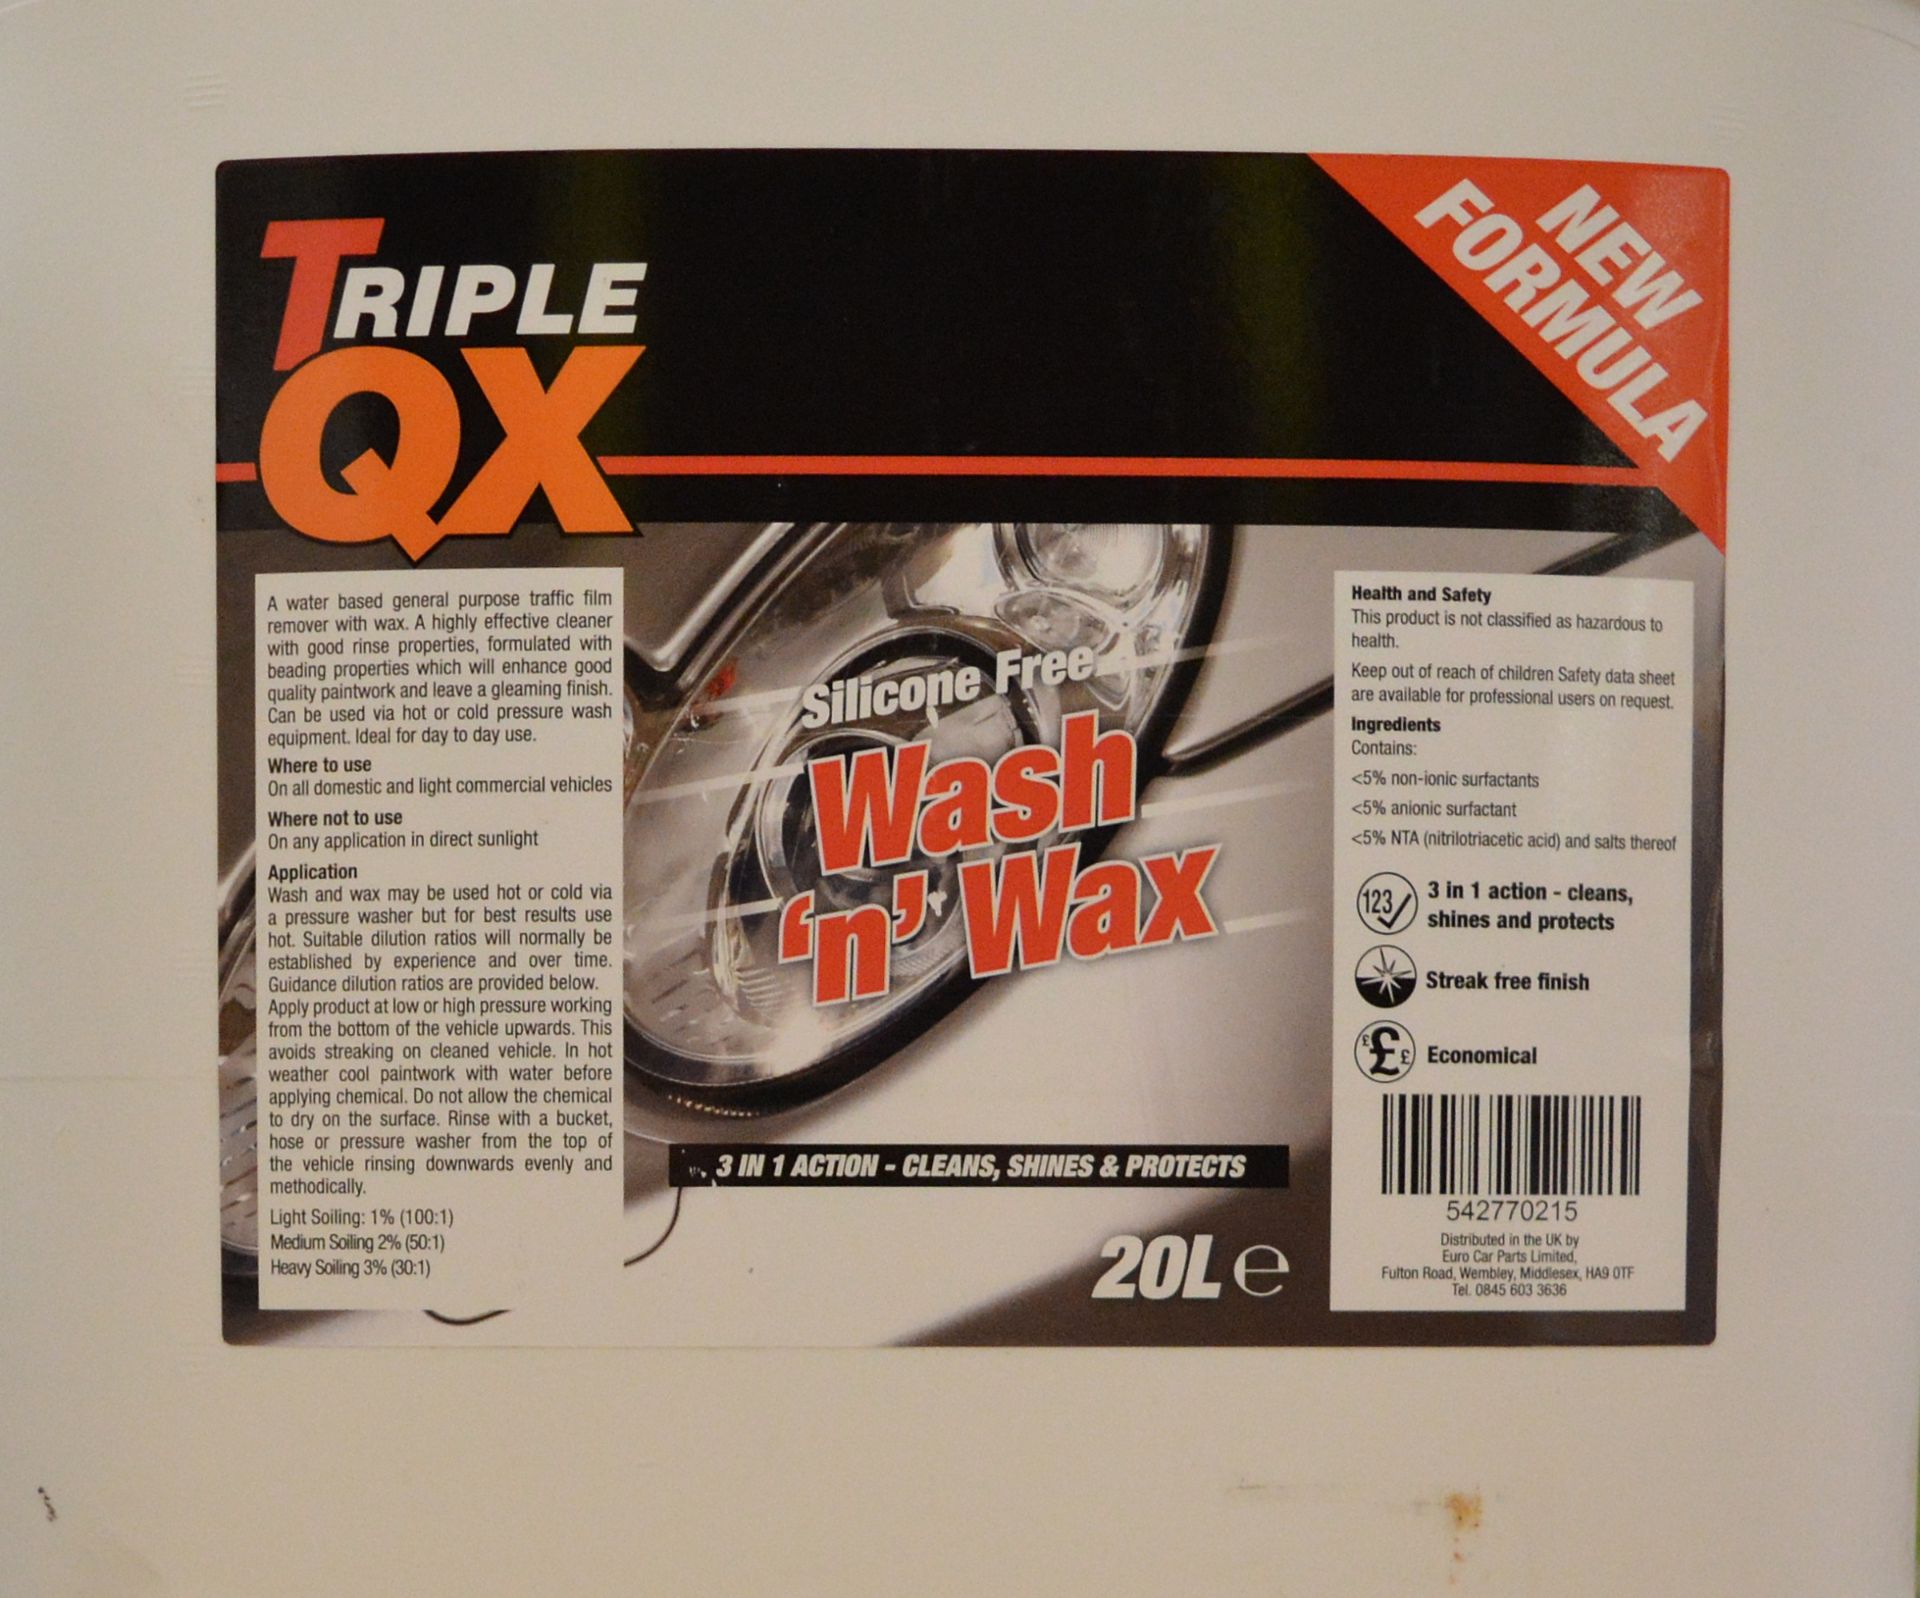 2x Triple QX Wash n Wax - 20L Bottles - Image 2 of 2